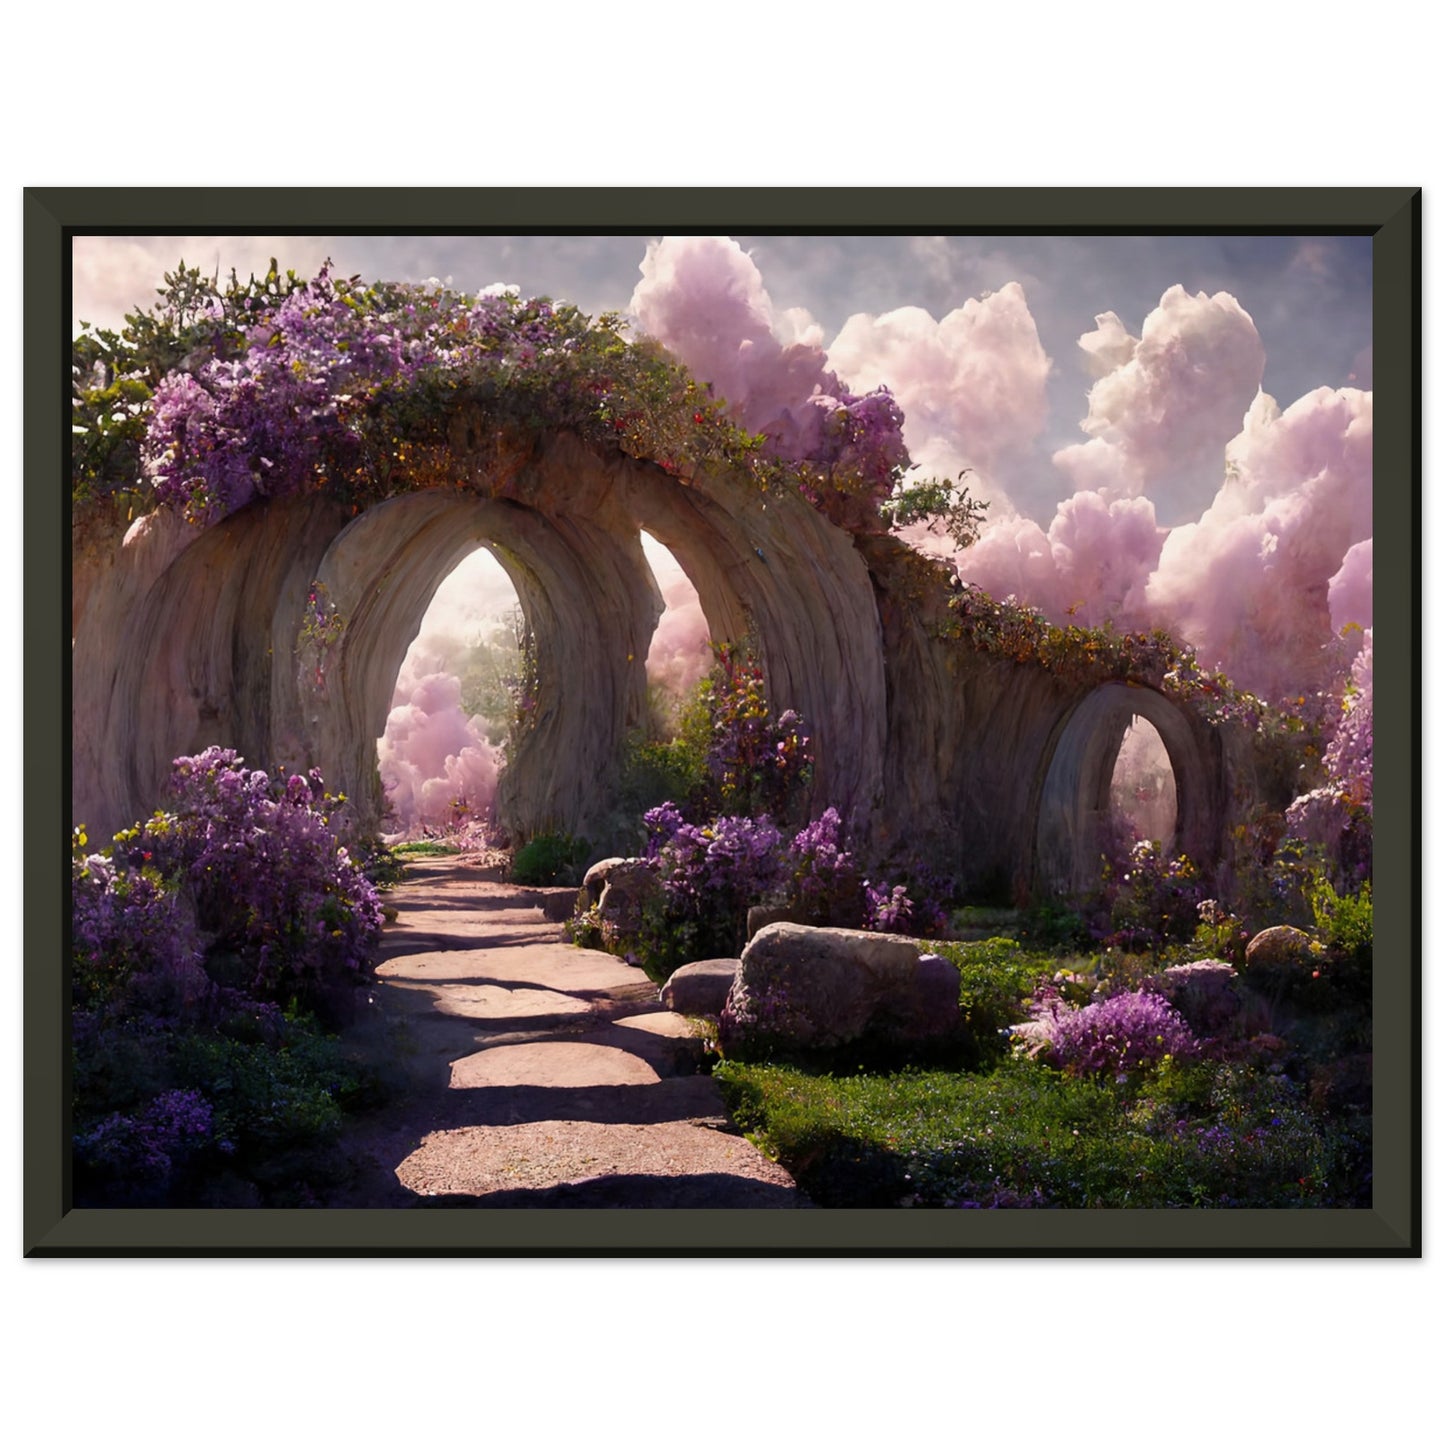 Fairy garden with a stone arch